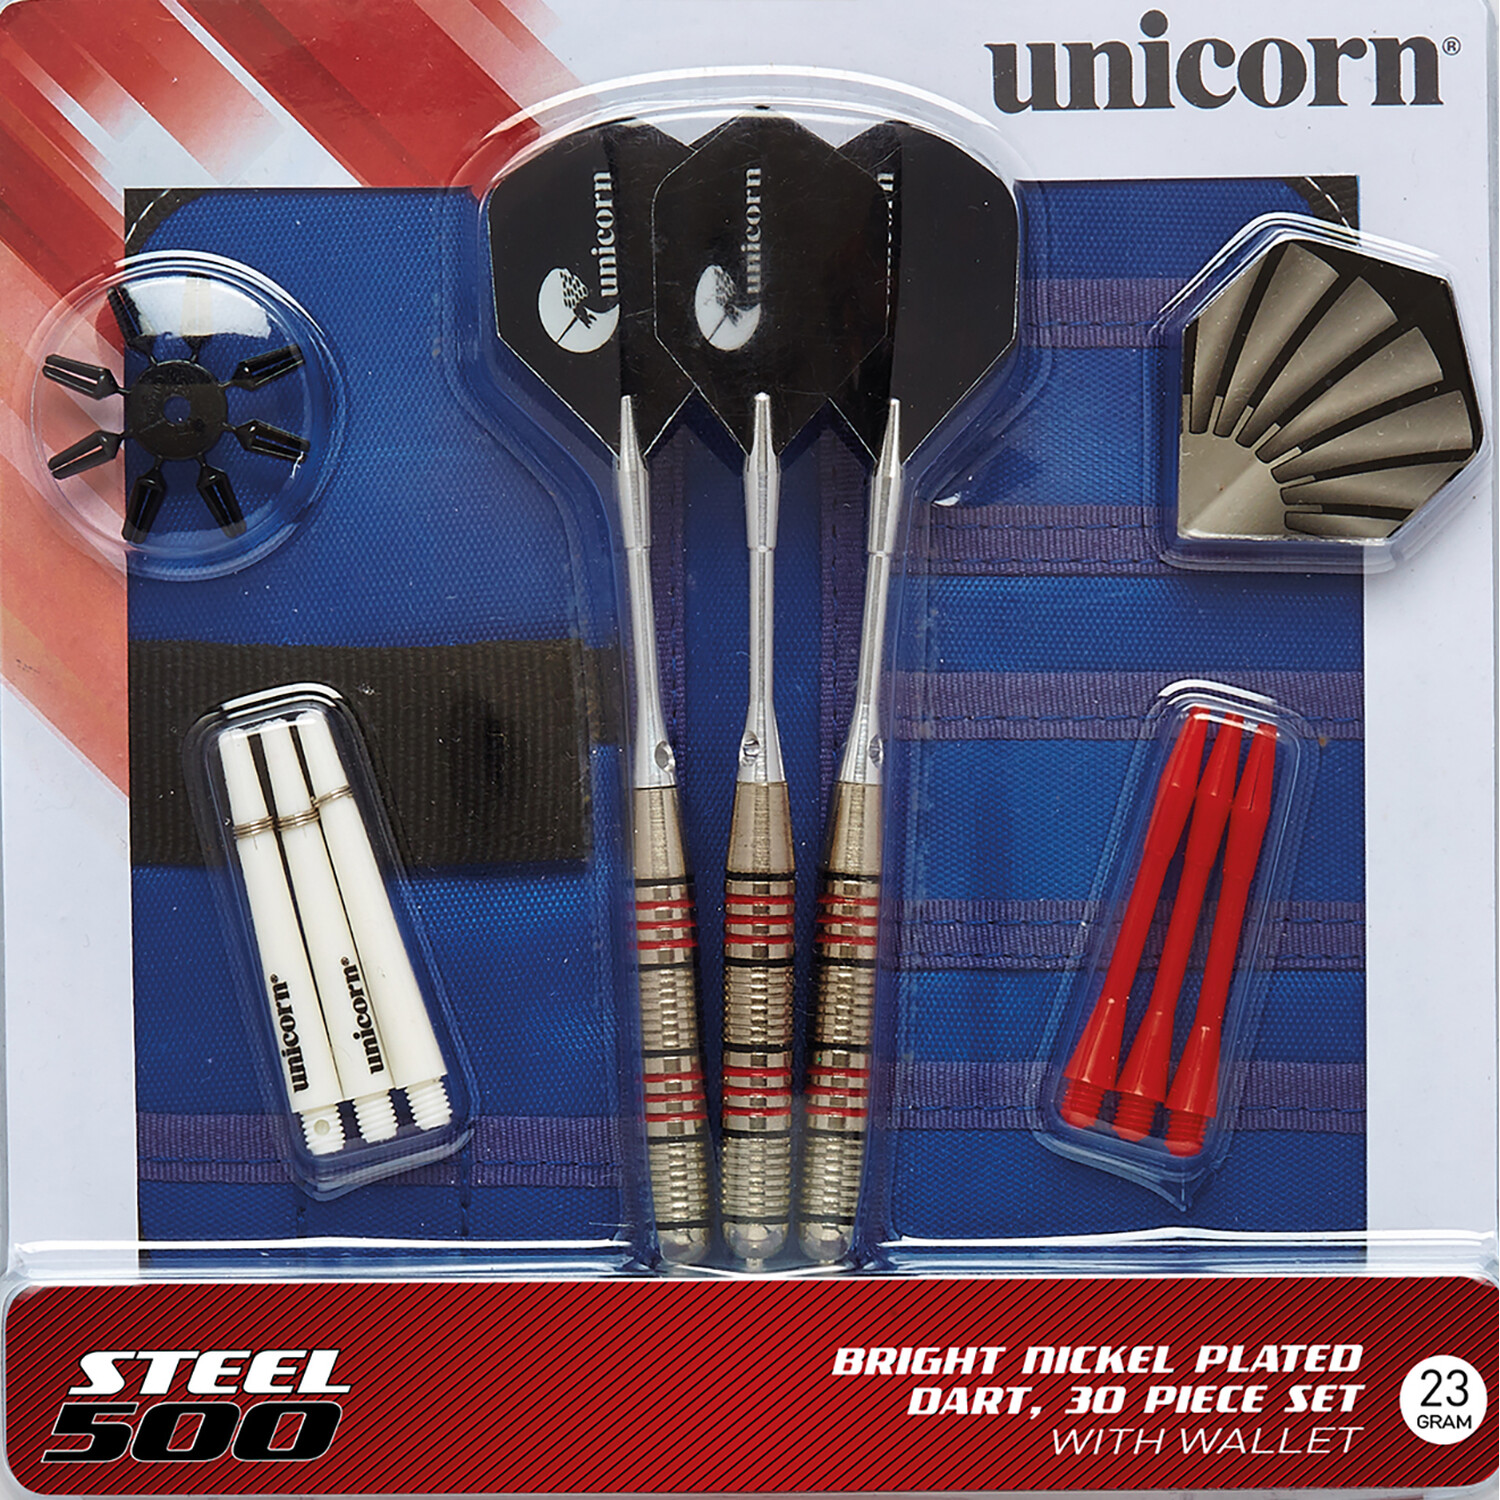 Unicorn Darts Steel 500 23g Image